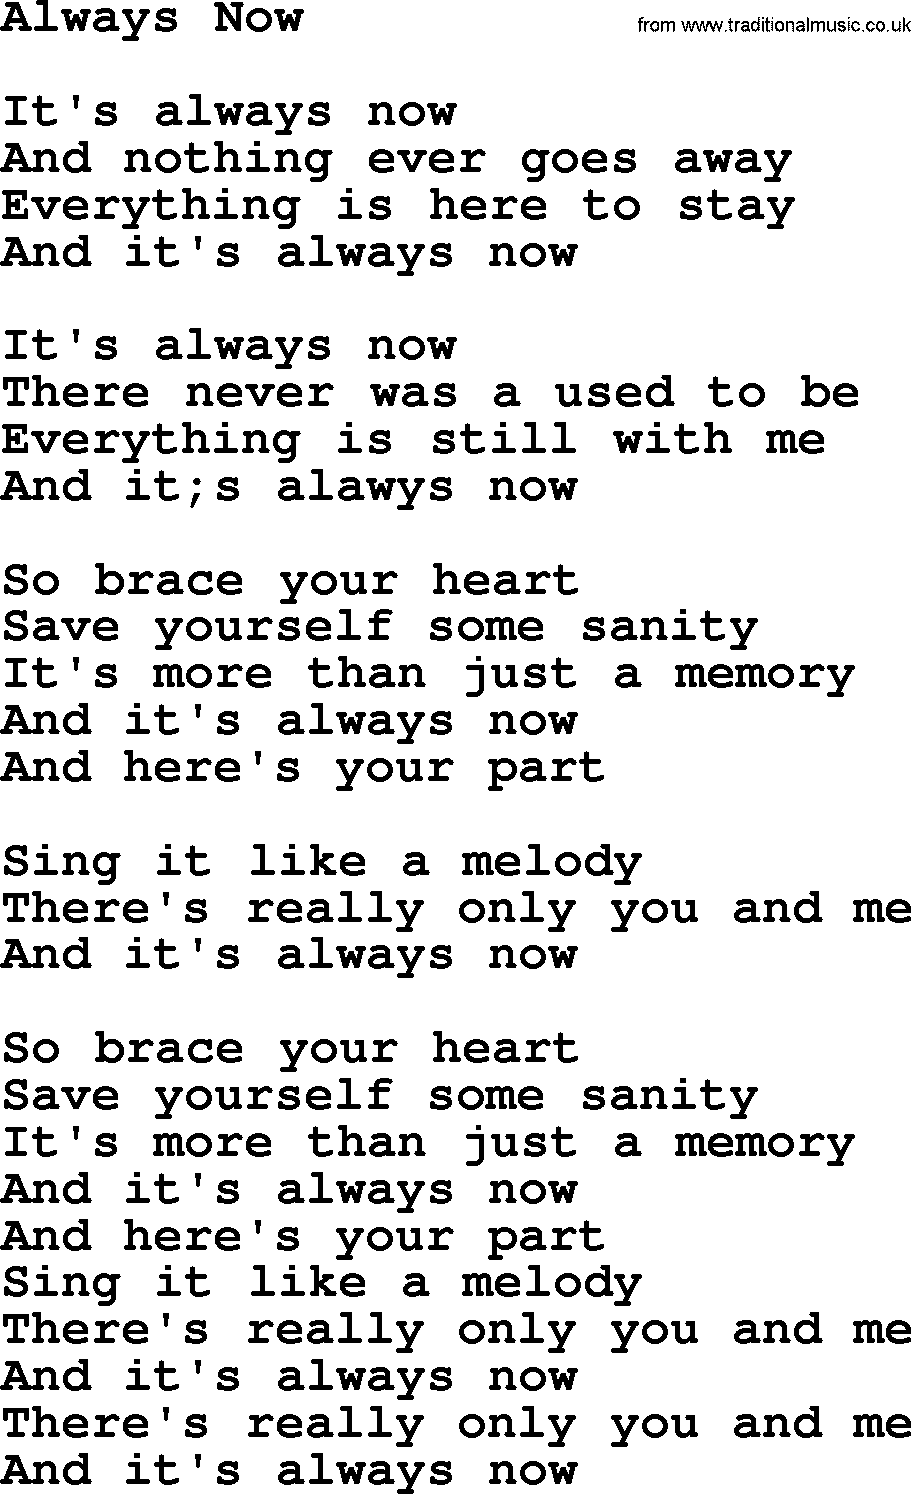 Willie Nelson song: Always Now lyrics